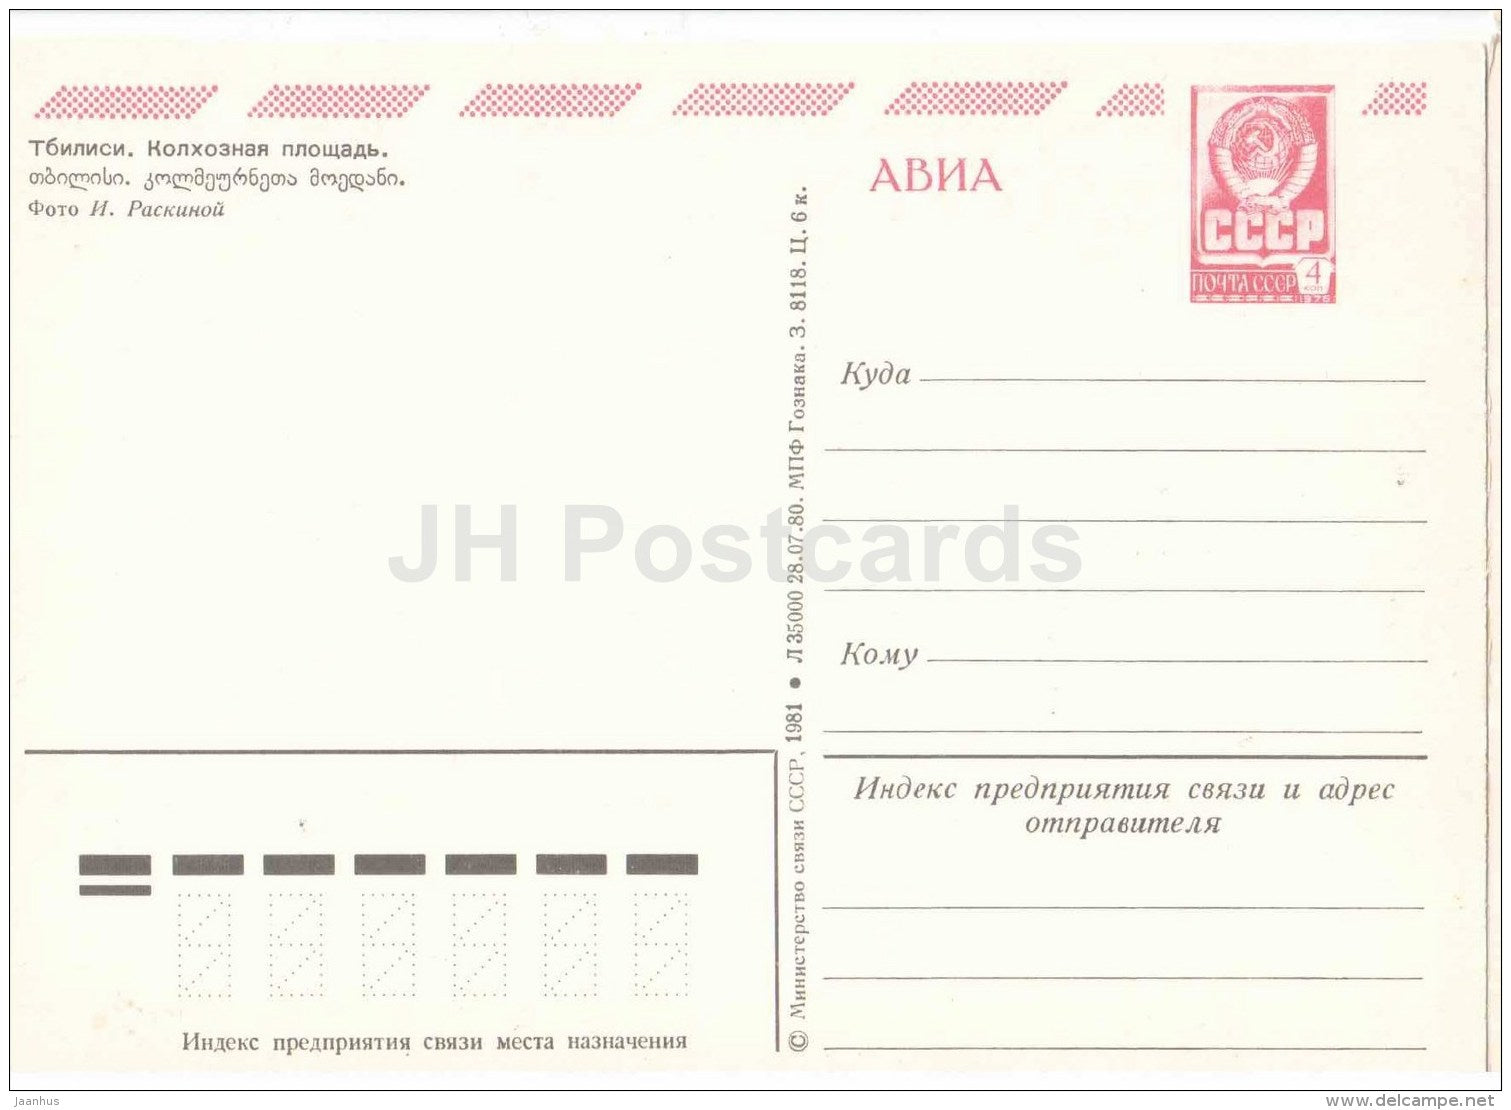 Kolkhoz square - Tbilisi - postal stationery - AVIA - 1981 - Georgia USSR - unused - JH Postcards